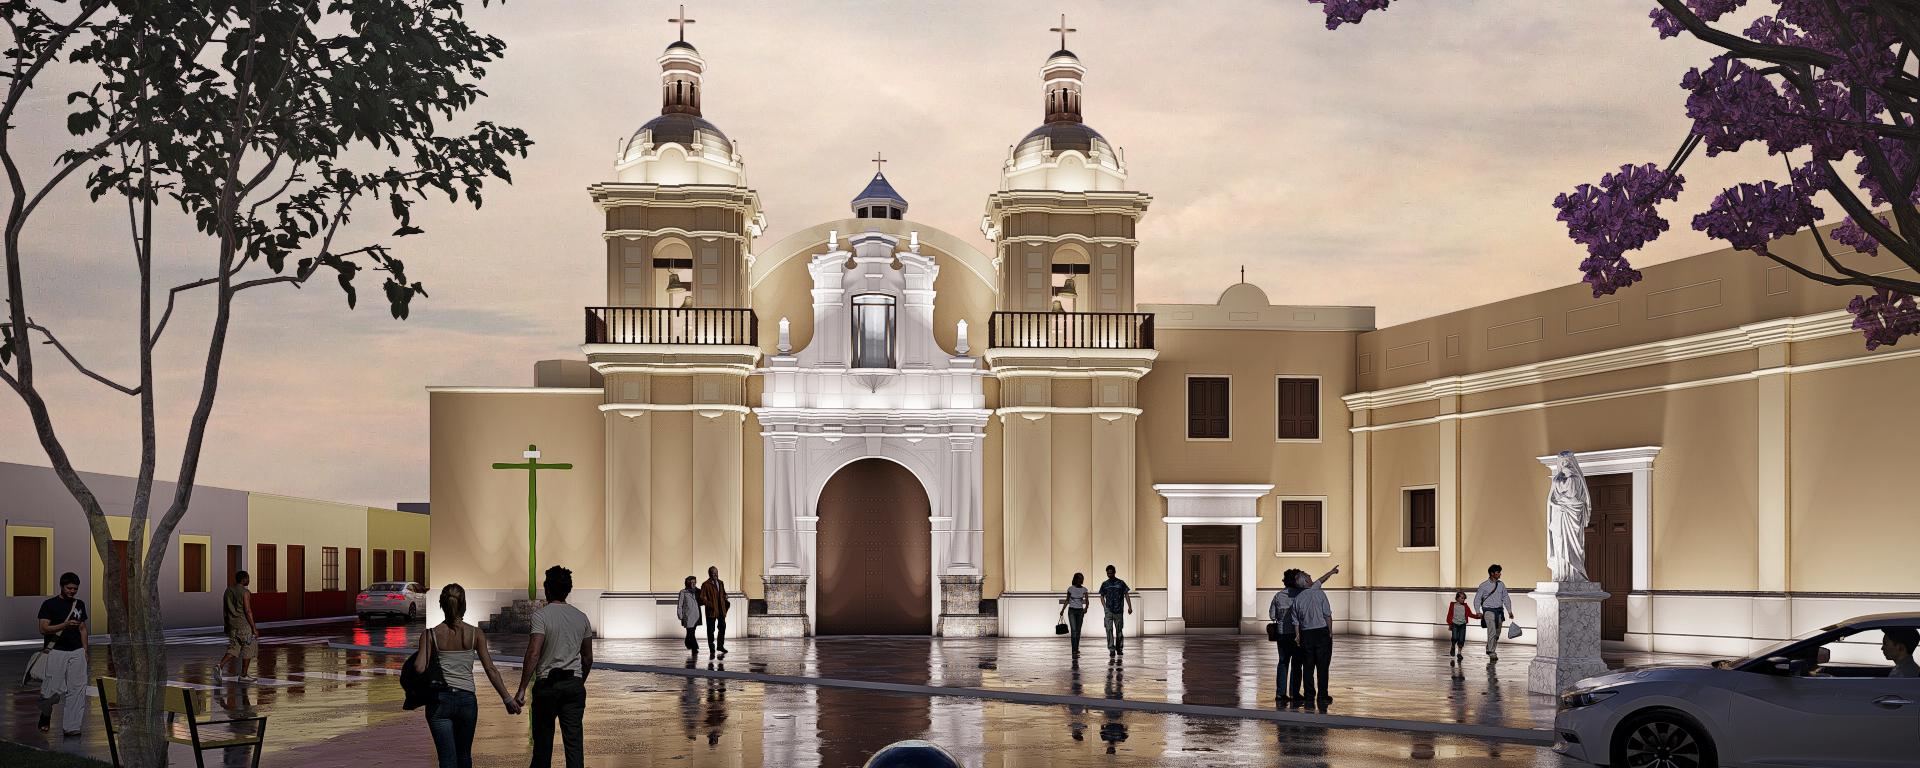 Se amplía el Centro Histórico de Lima: seis monumentos se agregan al Patrimonio Mundial